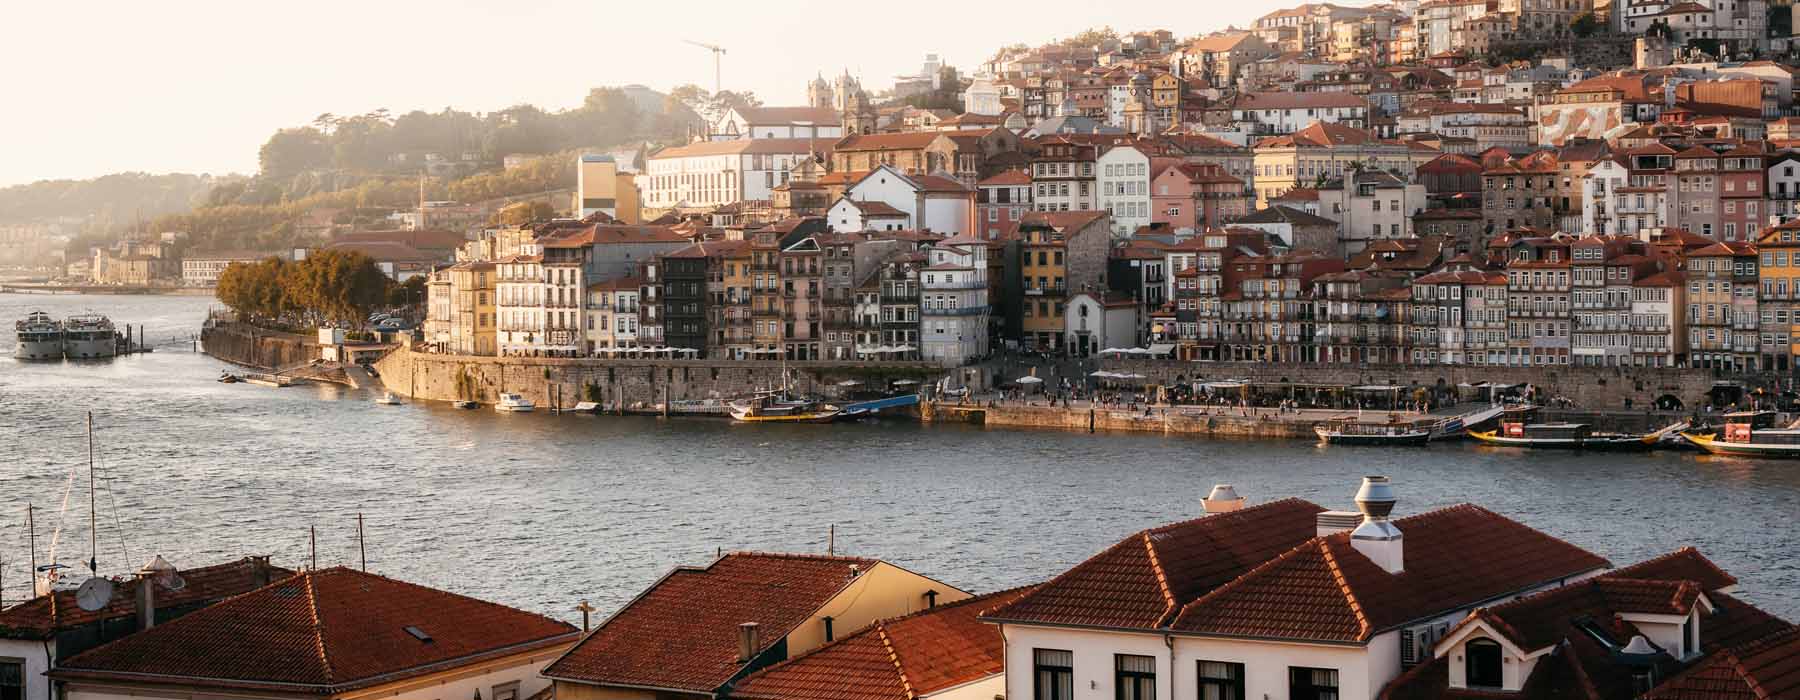 Portugal<br class="hidden-md hidden-lg" /> Watersports Holidays